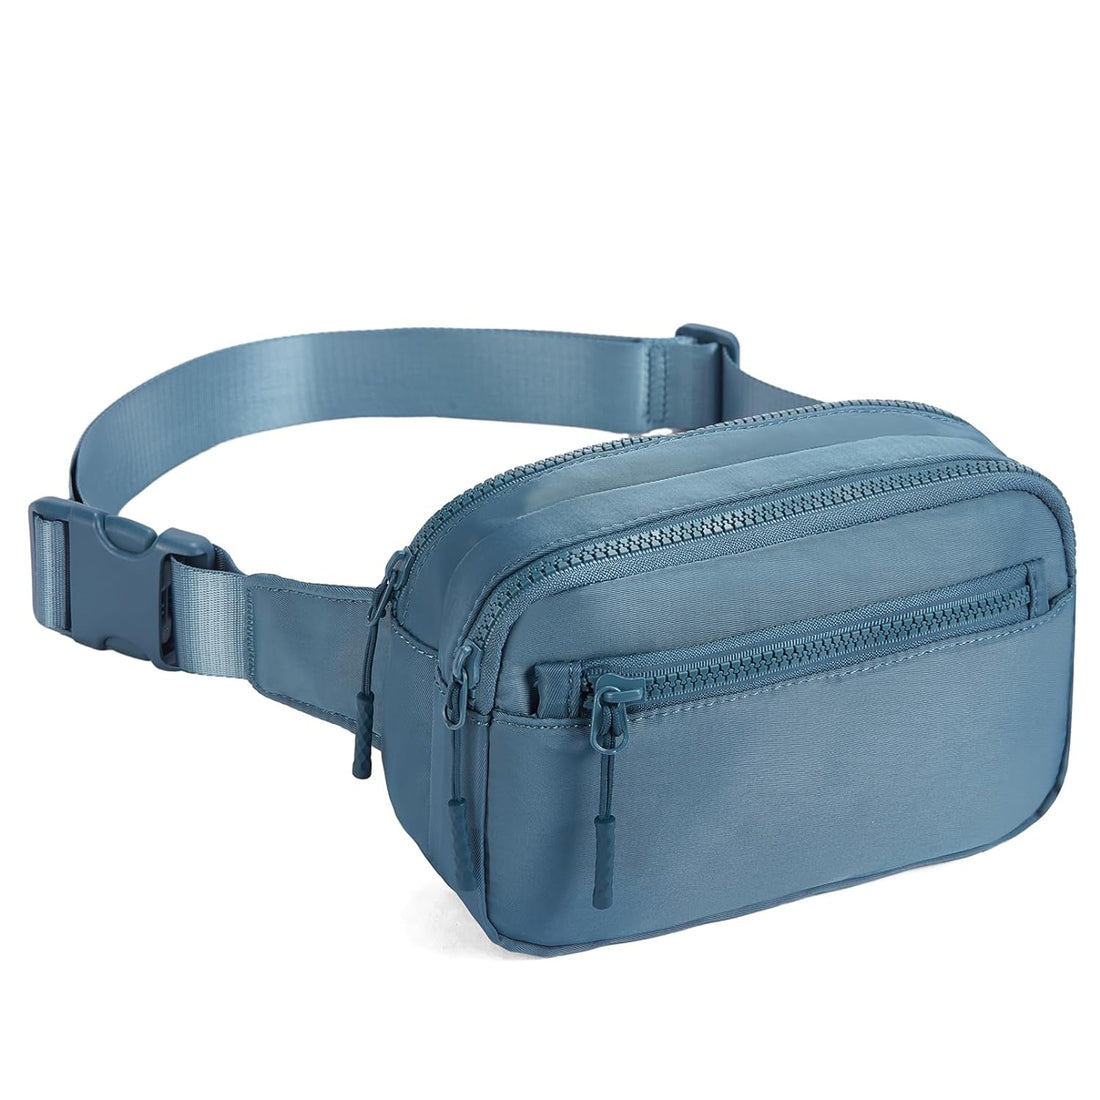 Telena Fanny Packs for Women Men Fashionable Cross Body Fanny Pack Belt Bag for Women with Adjustable Straps, 1-Aqua Blue, One Size